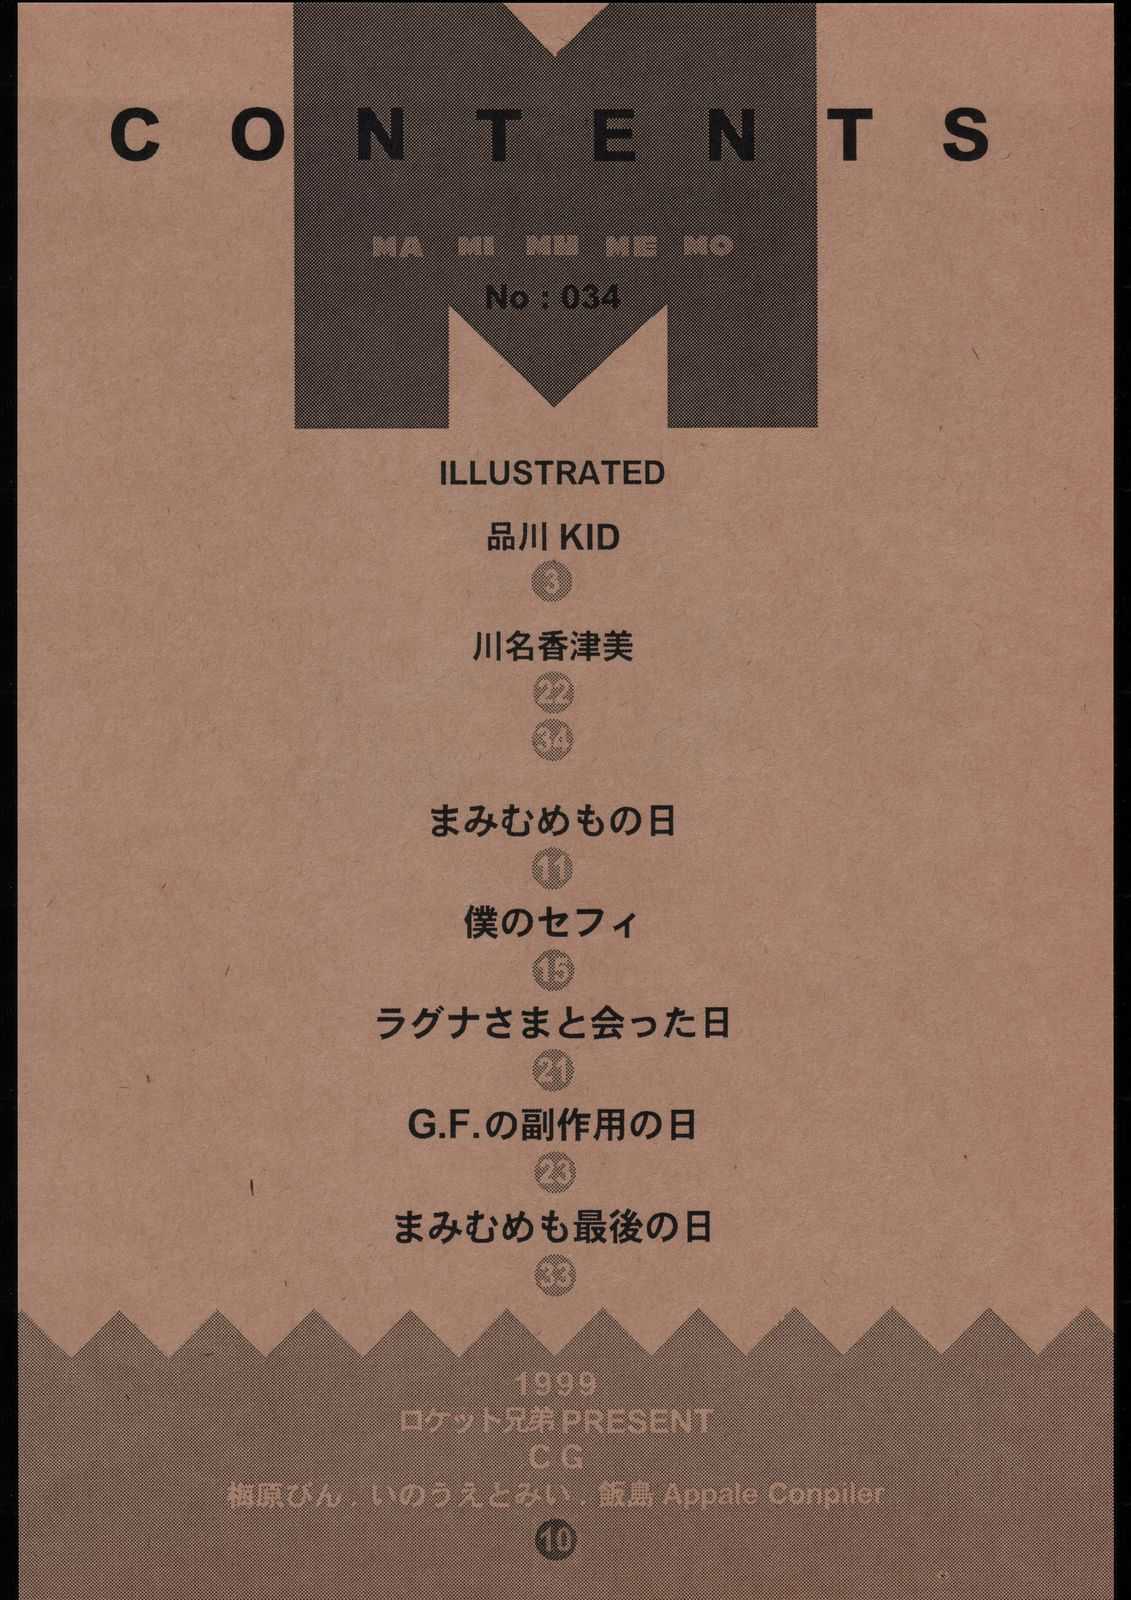 [Final Fantasy 8] MA MI MU ME MO (Rocket Kyoudai) [ロケット兄弟] MA MI MU ME MO